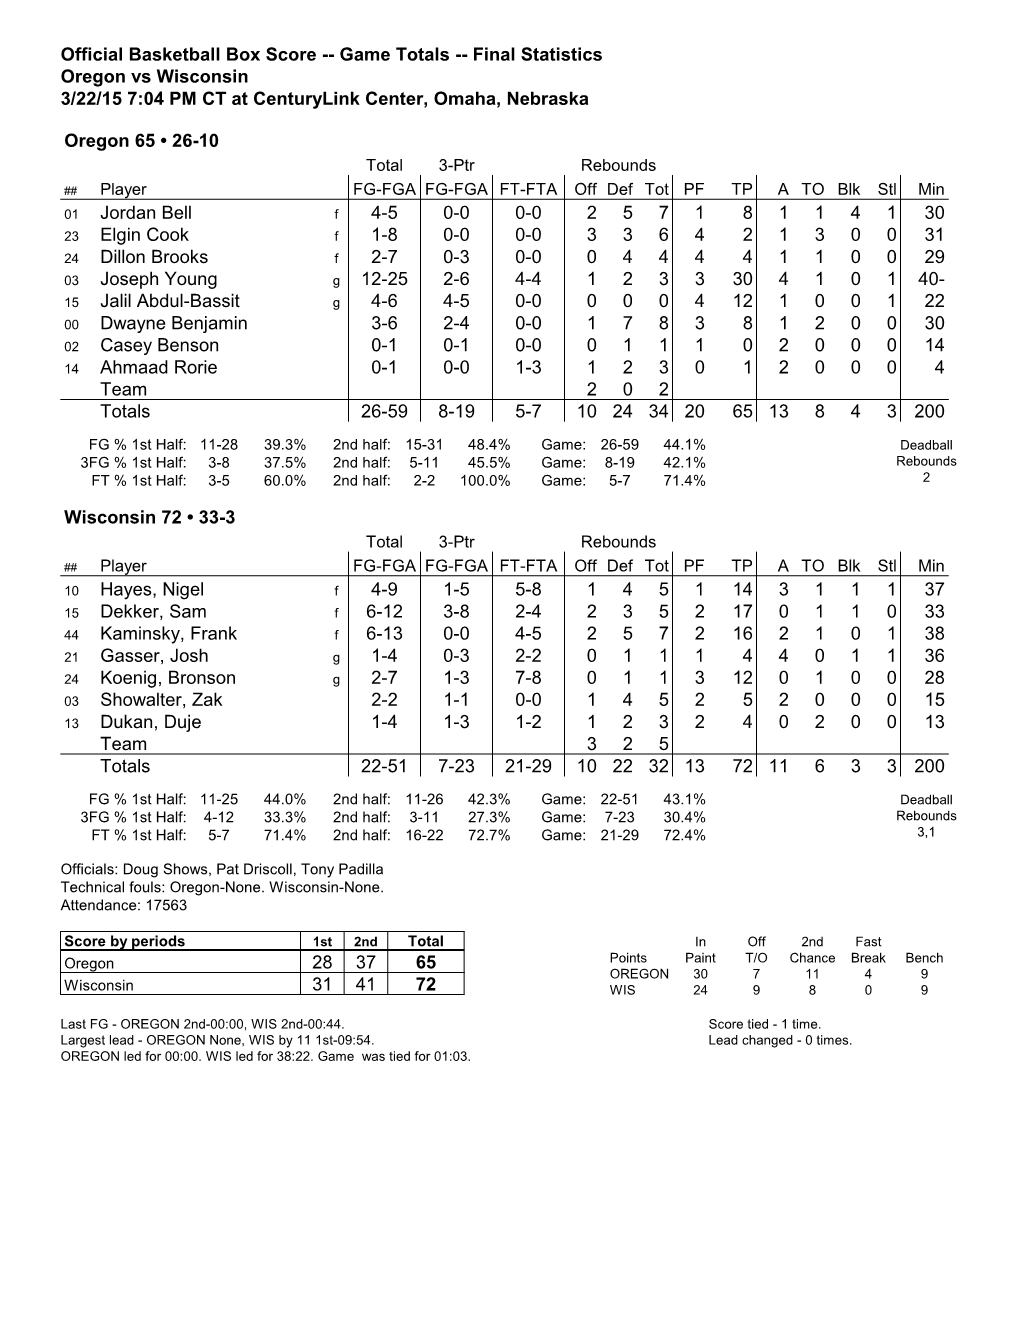 Box Score -- Game Totals -- Final Statistics Oregon Vs Wisconsin 3/22/15 7:04 PM CT at Centurylink Center, Omaha, Nebraska